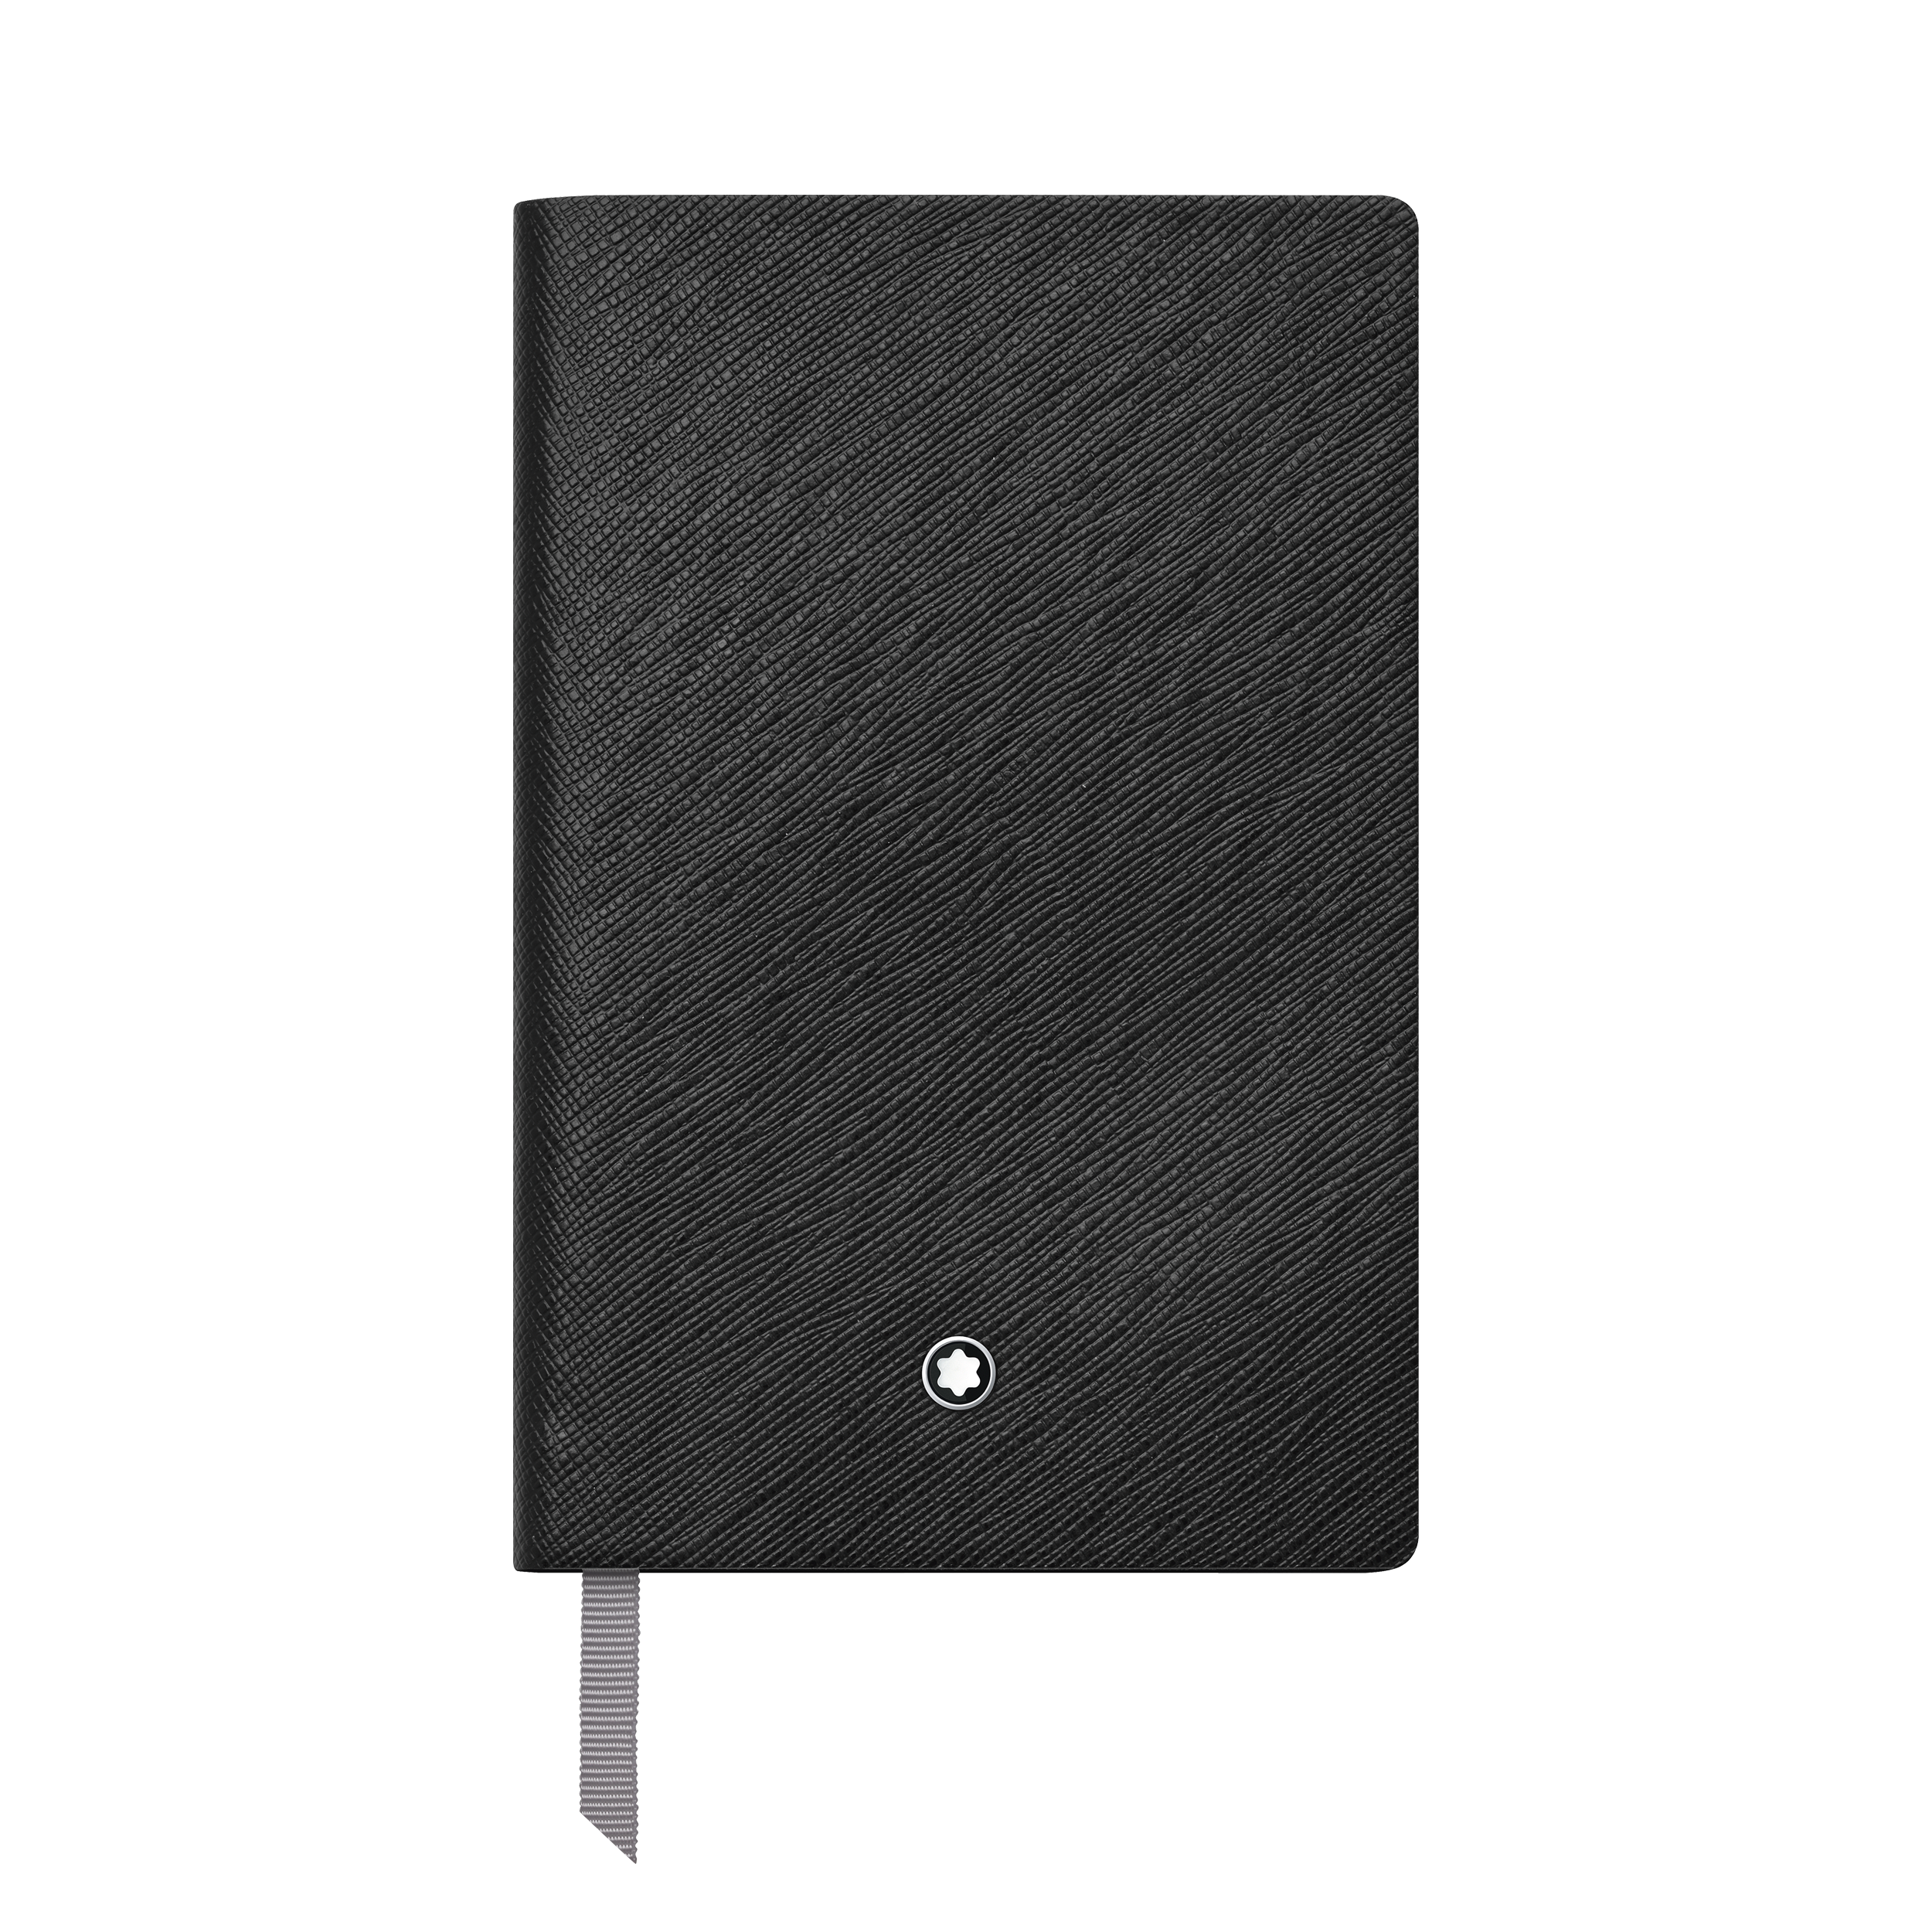 Montblanc Fine Stationery Notebook #148 Black, lined, image 1